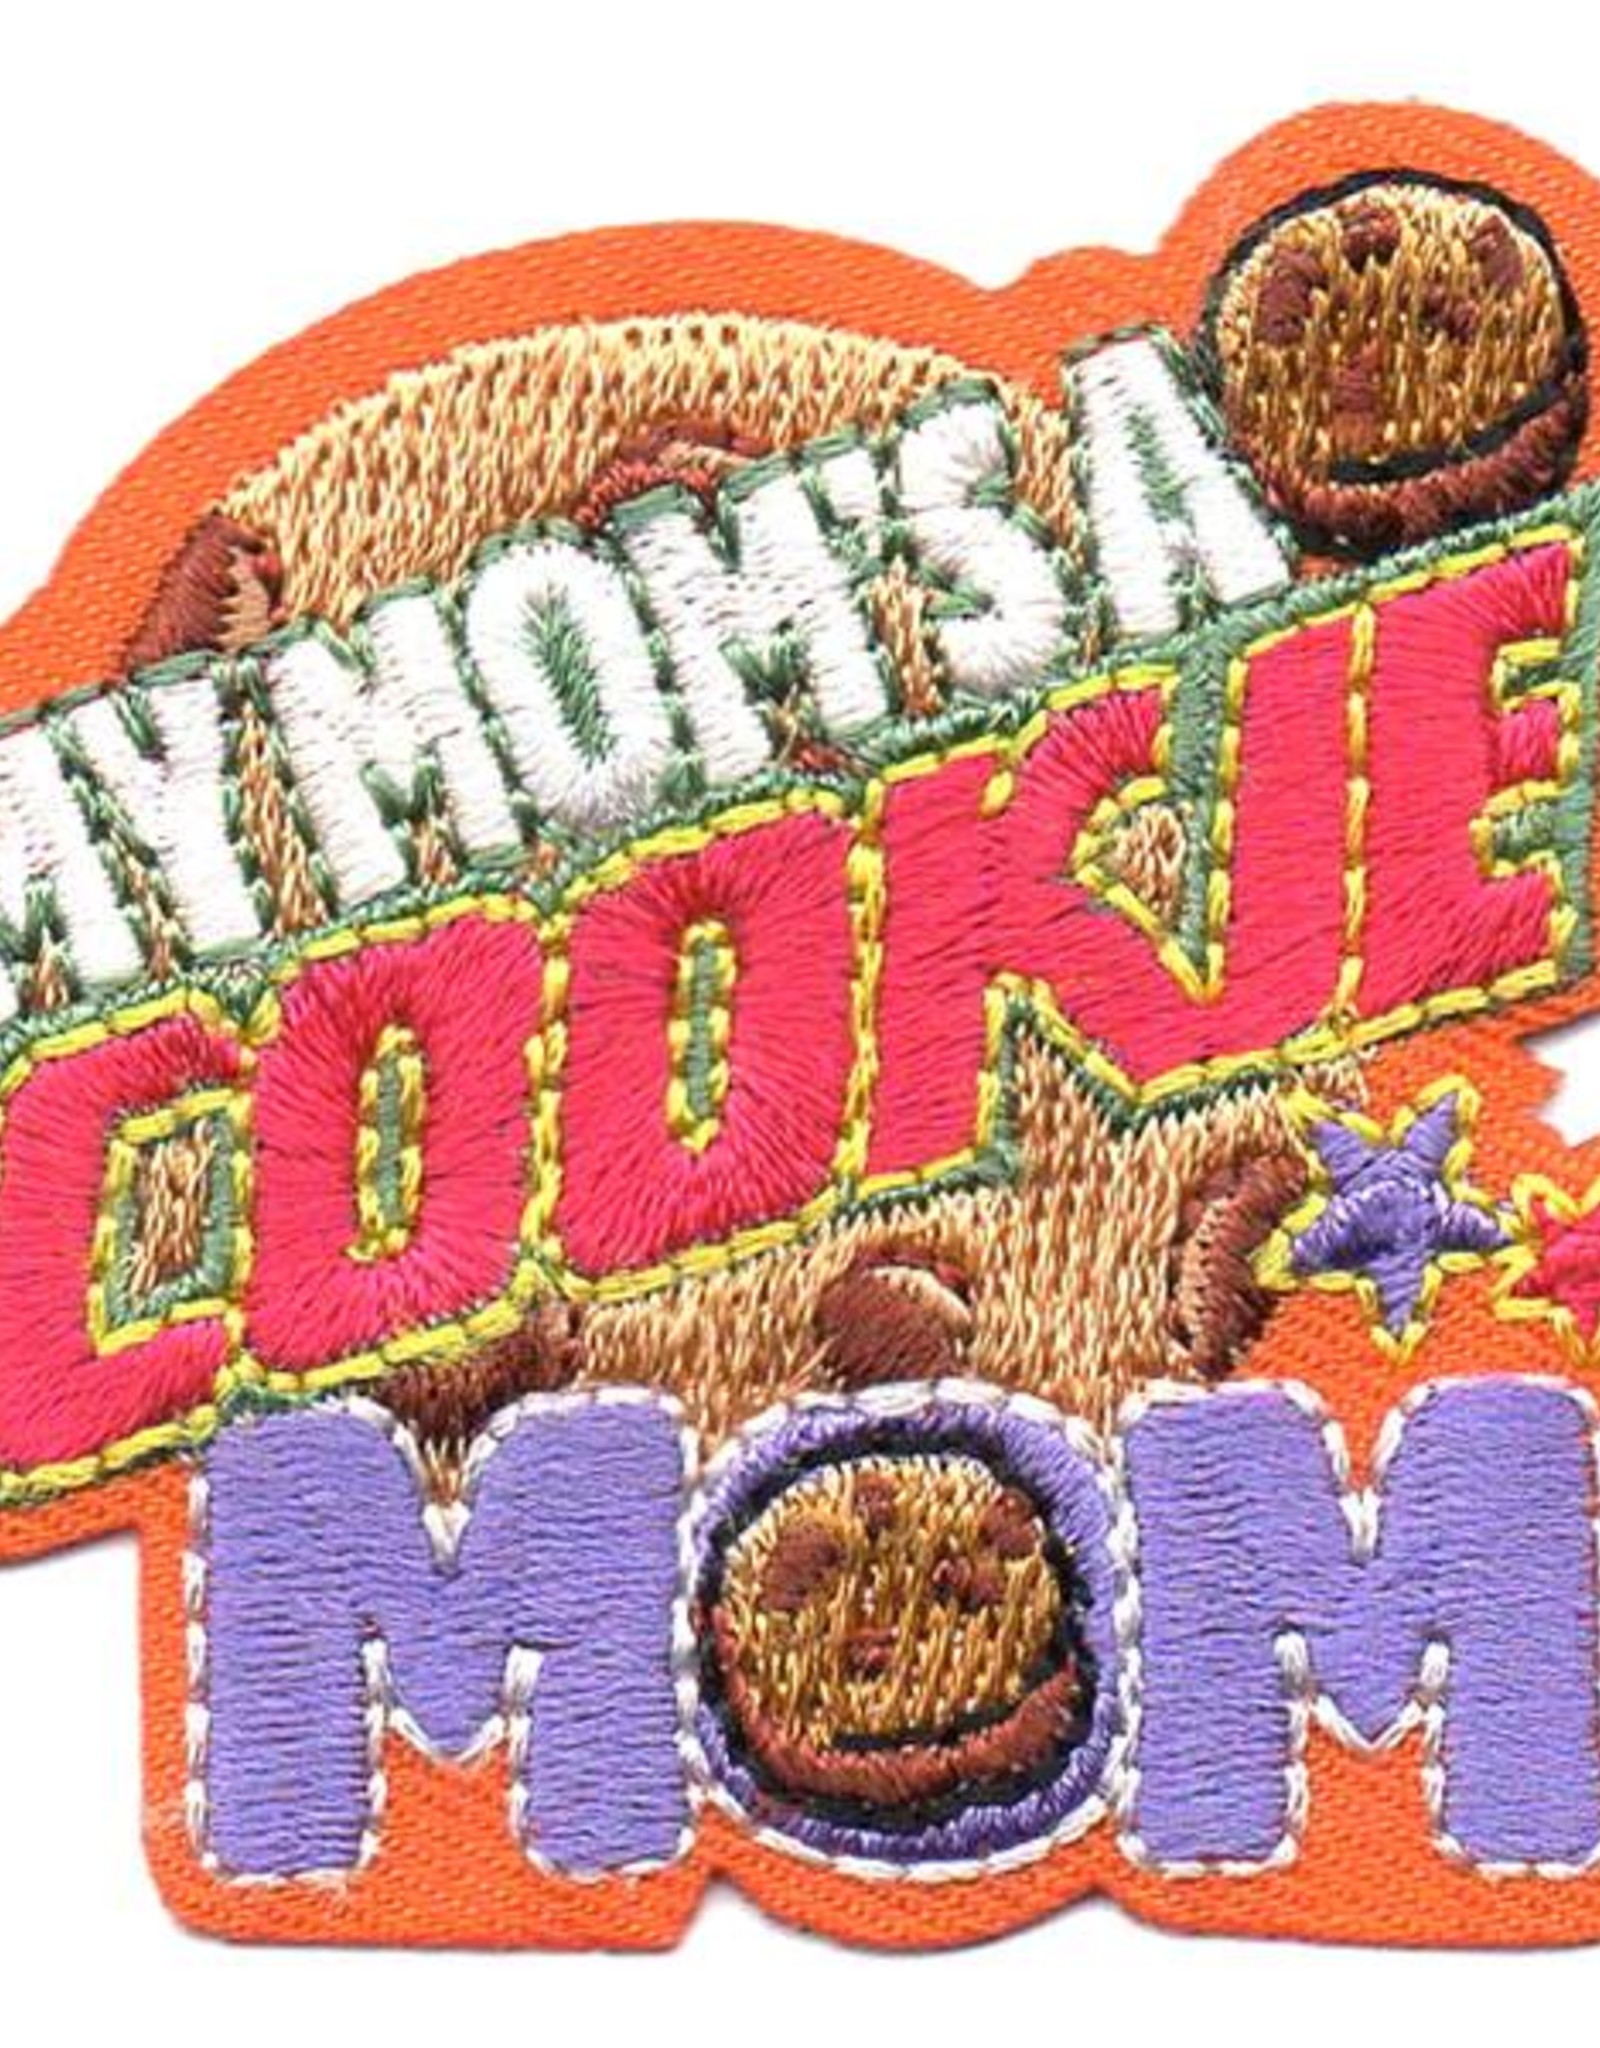 Advantage Emblem & Screen Prnt My Mom's a Cookie Mom Fun Patch